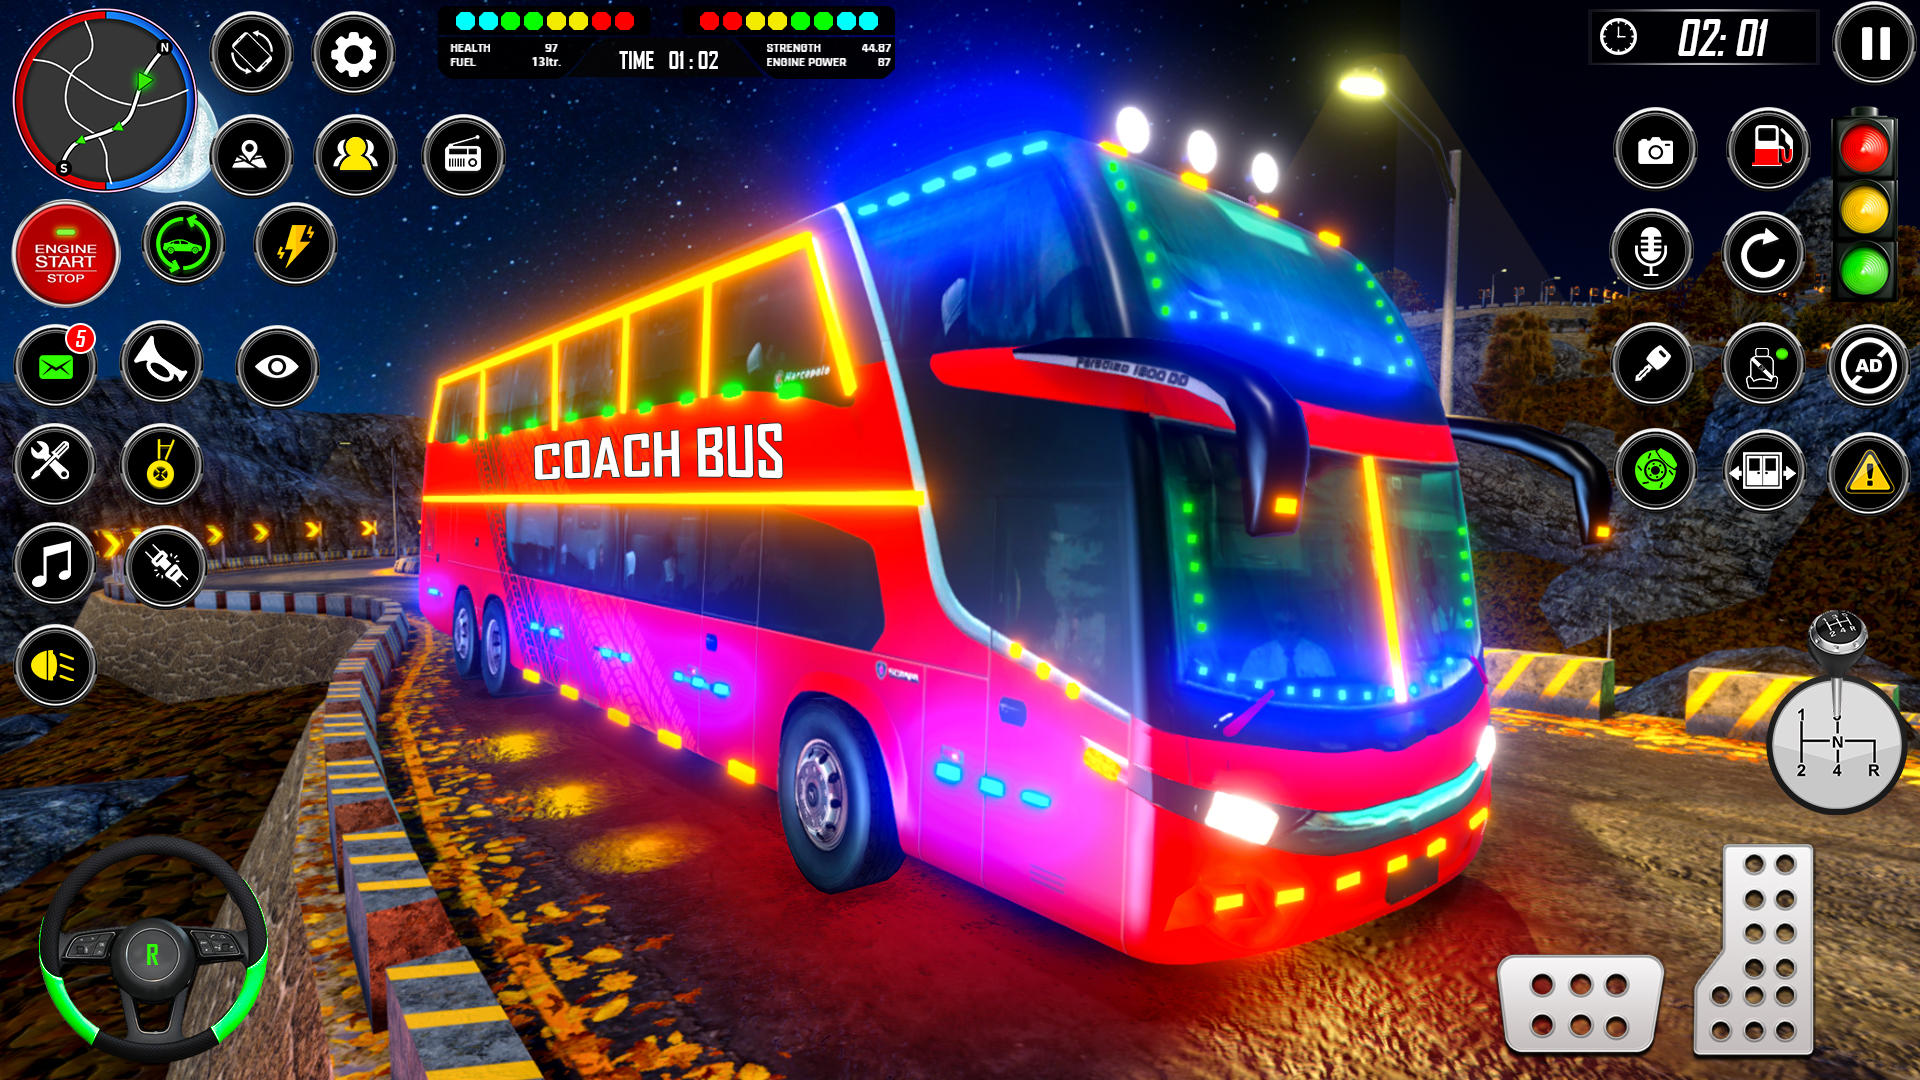 Screenshot 1 of giochi di autobus 3.6